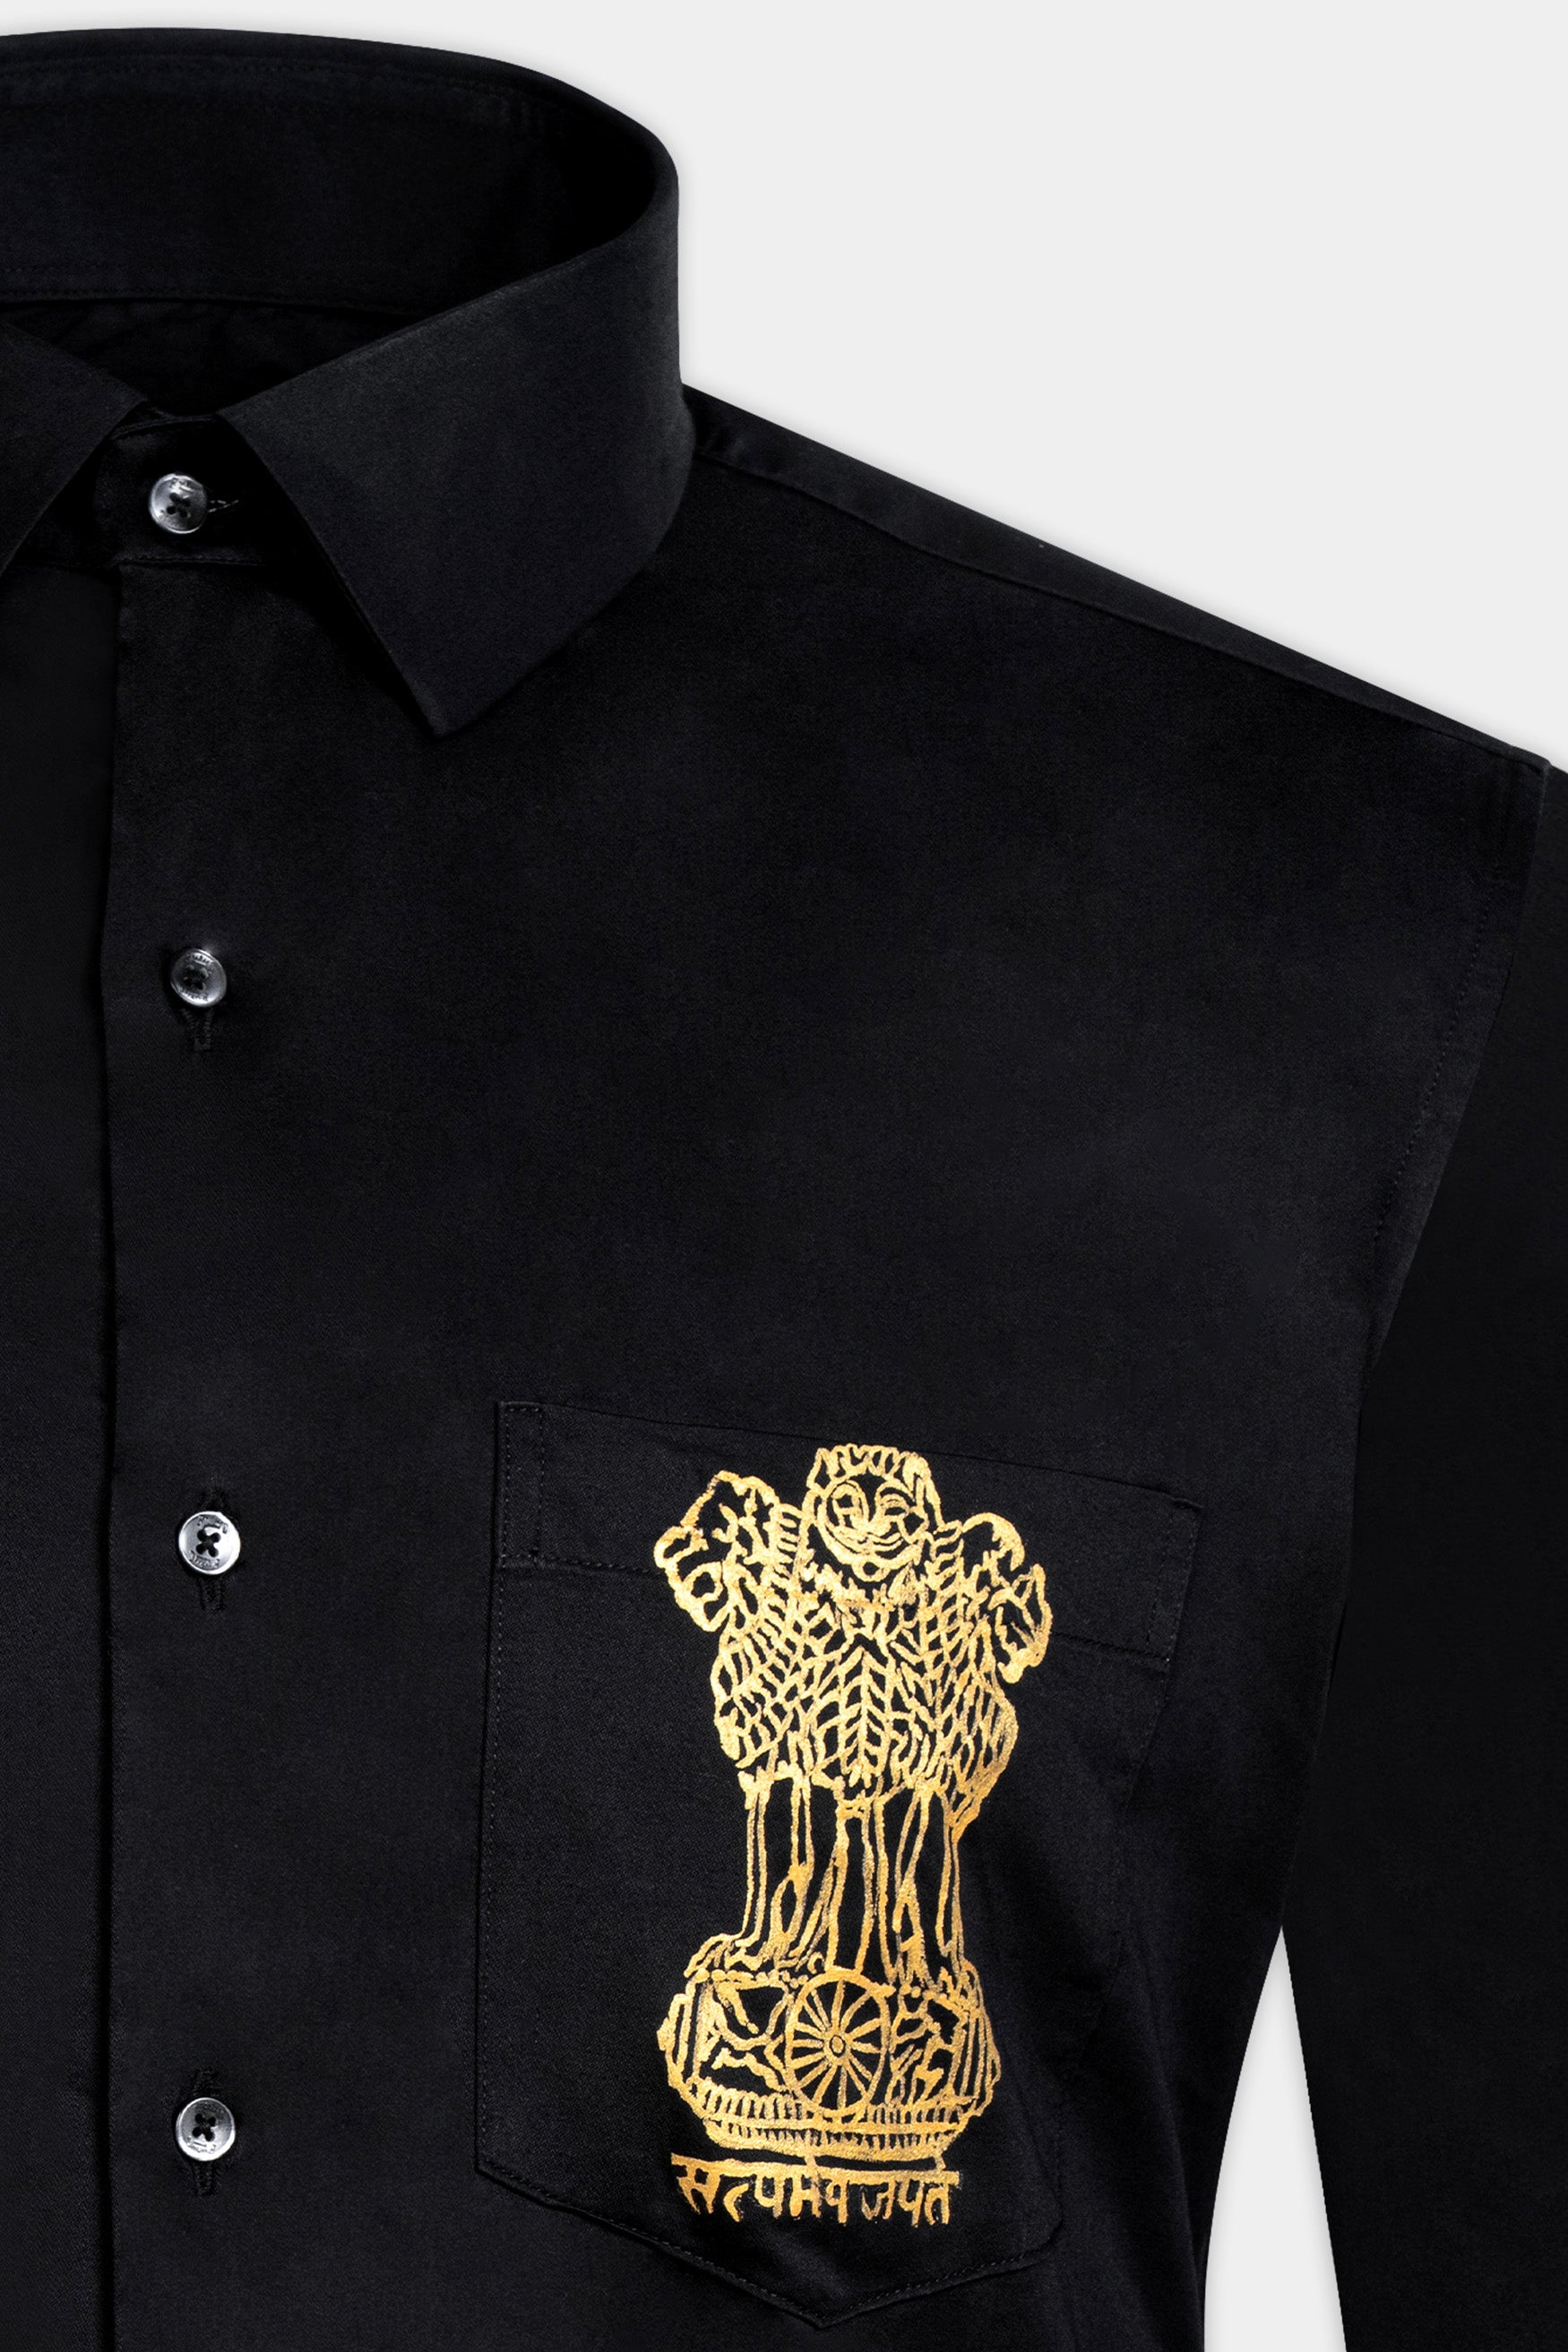 Black Shirts - Buy Black Shirts Online in India